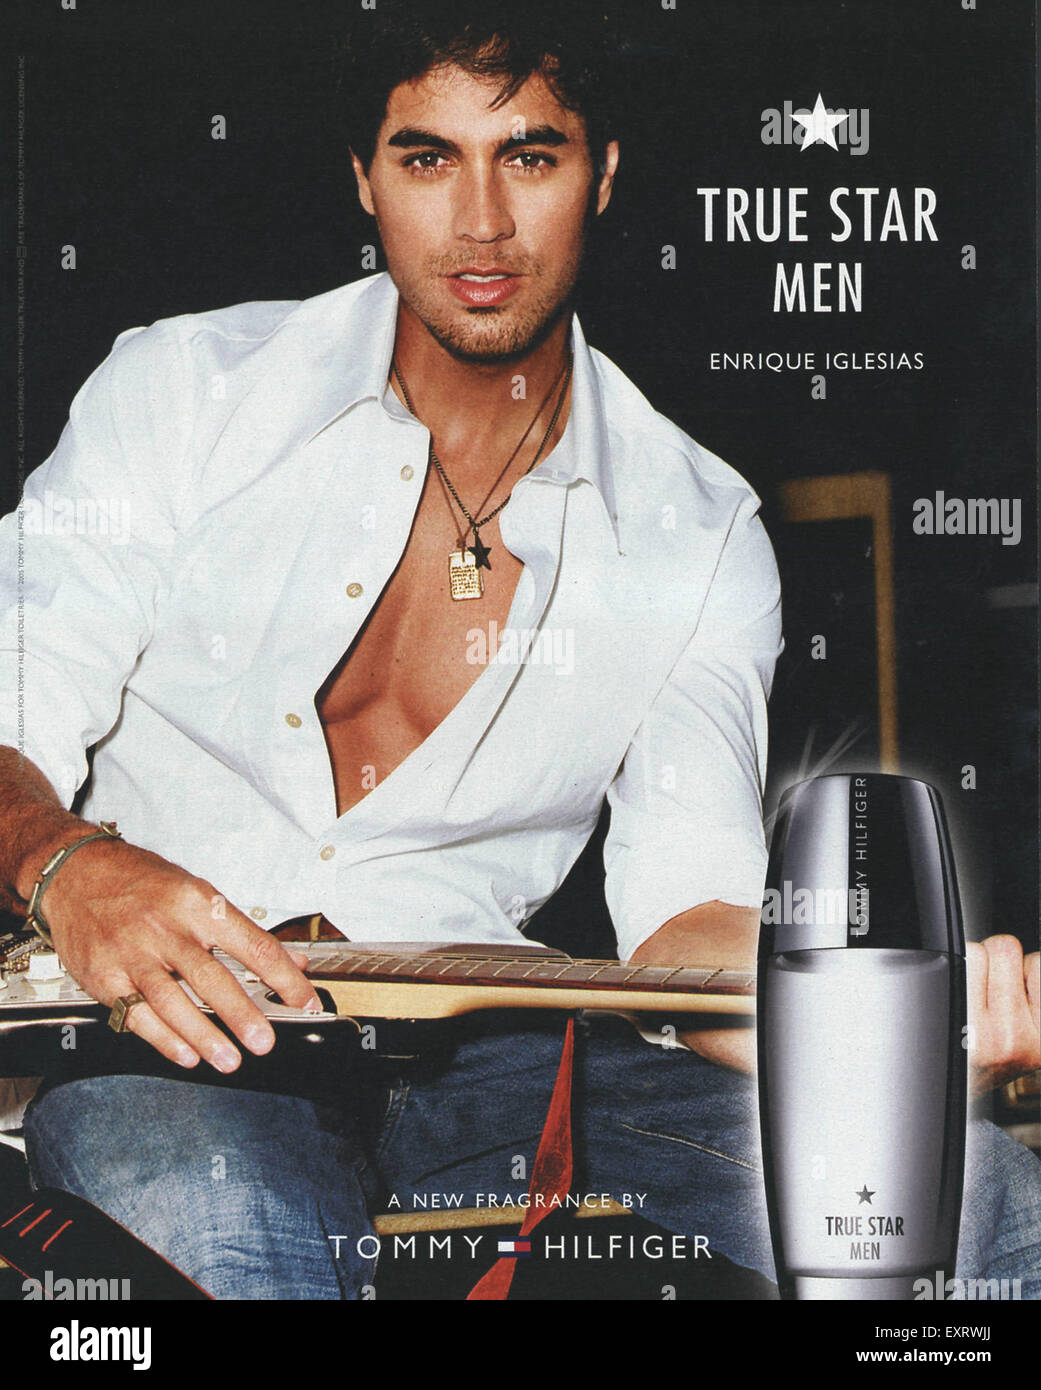 2000s UK Tommy Hilfiger true star Magazine Advert Stock Photo - Alamy